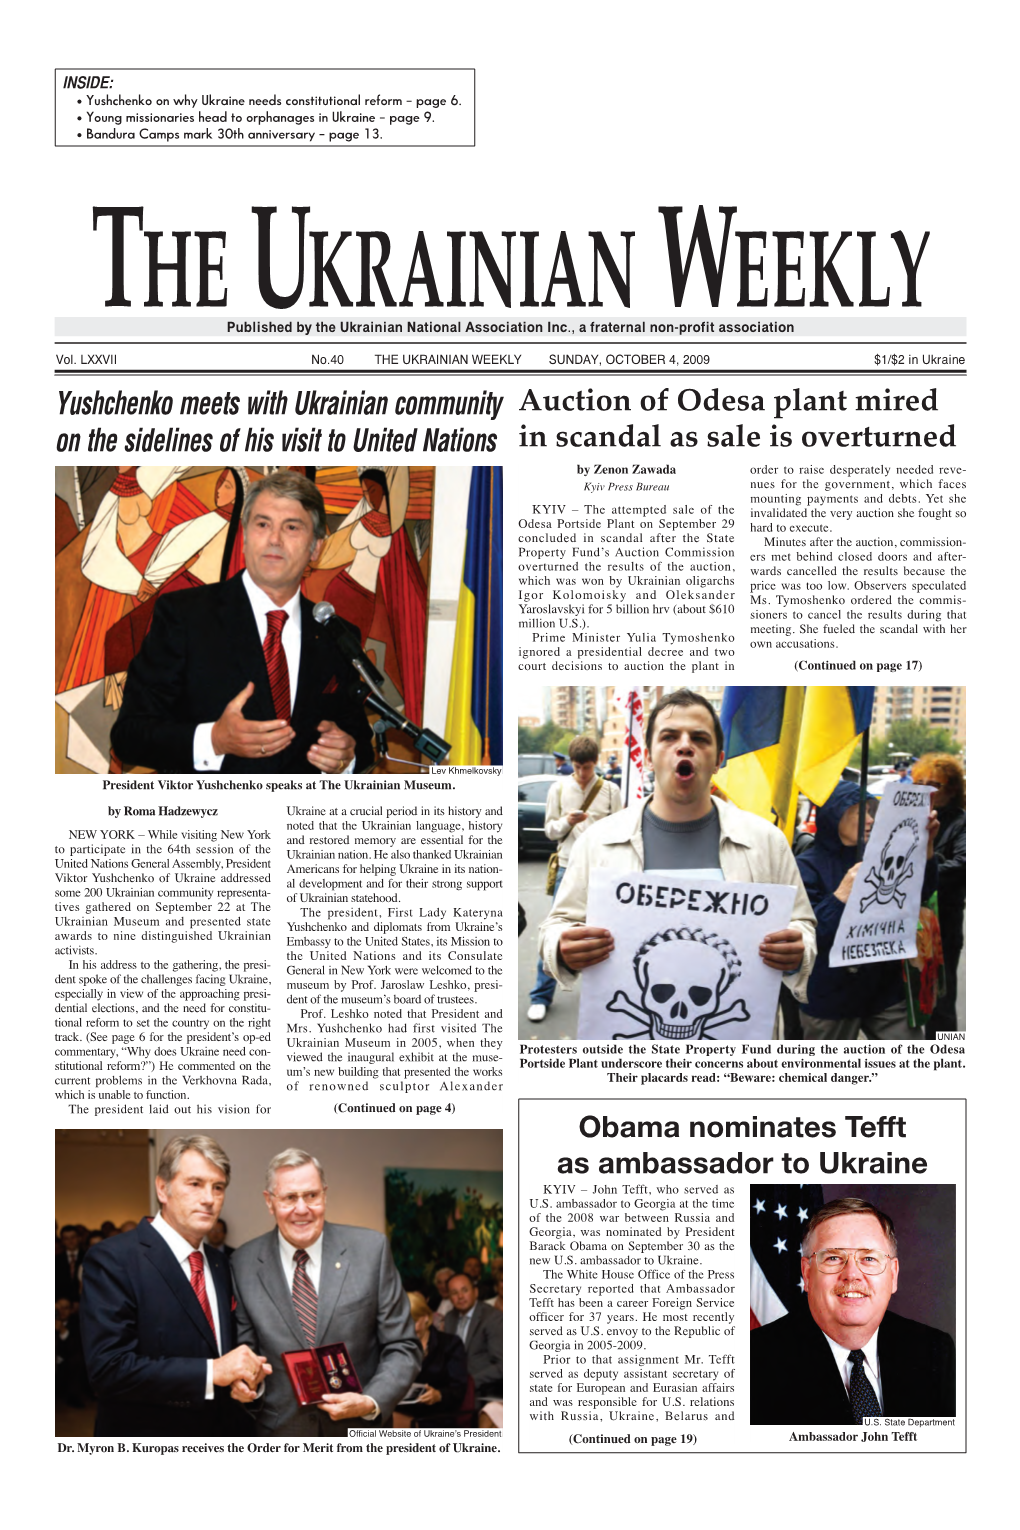 The Ukrainian Weekly 2009, No.40